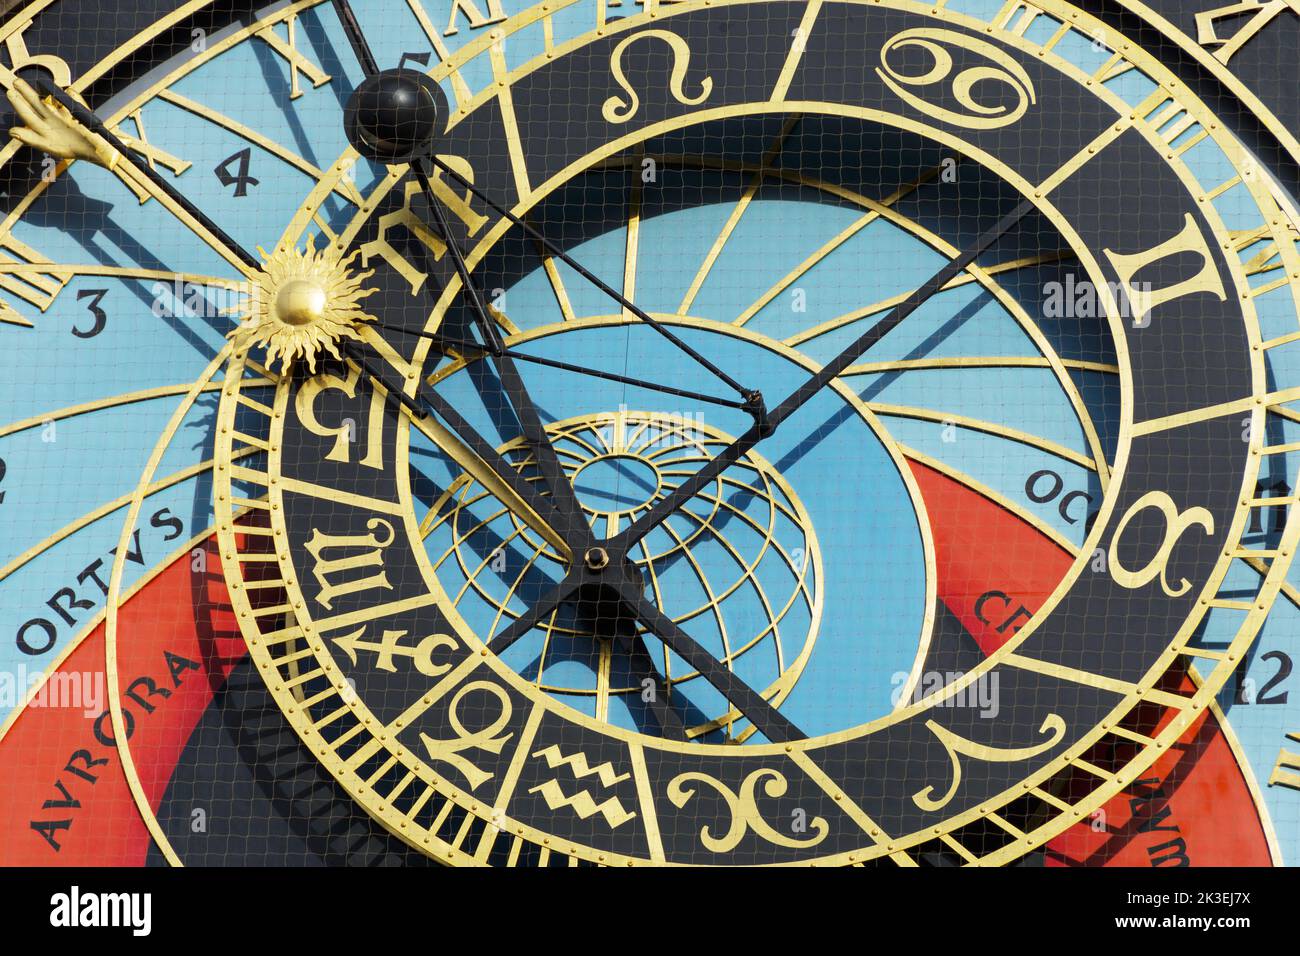 Prague photo series: detail of the Prague astronomical clock Stock Photo